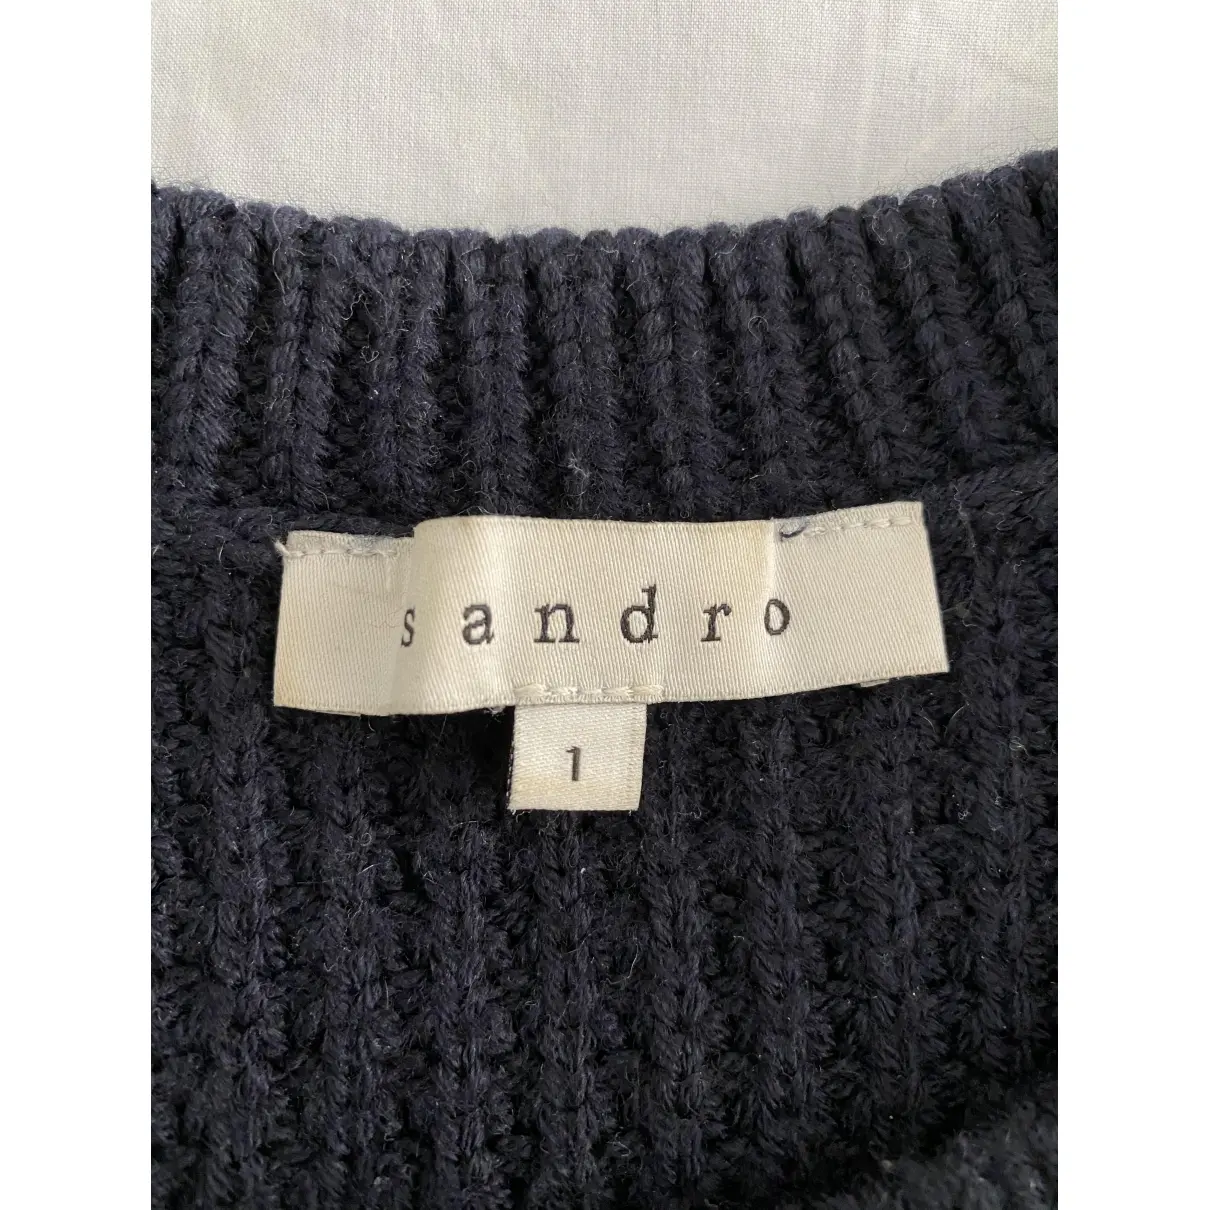 Buy Sandro Wool jumper online